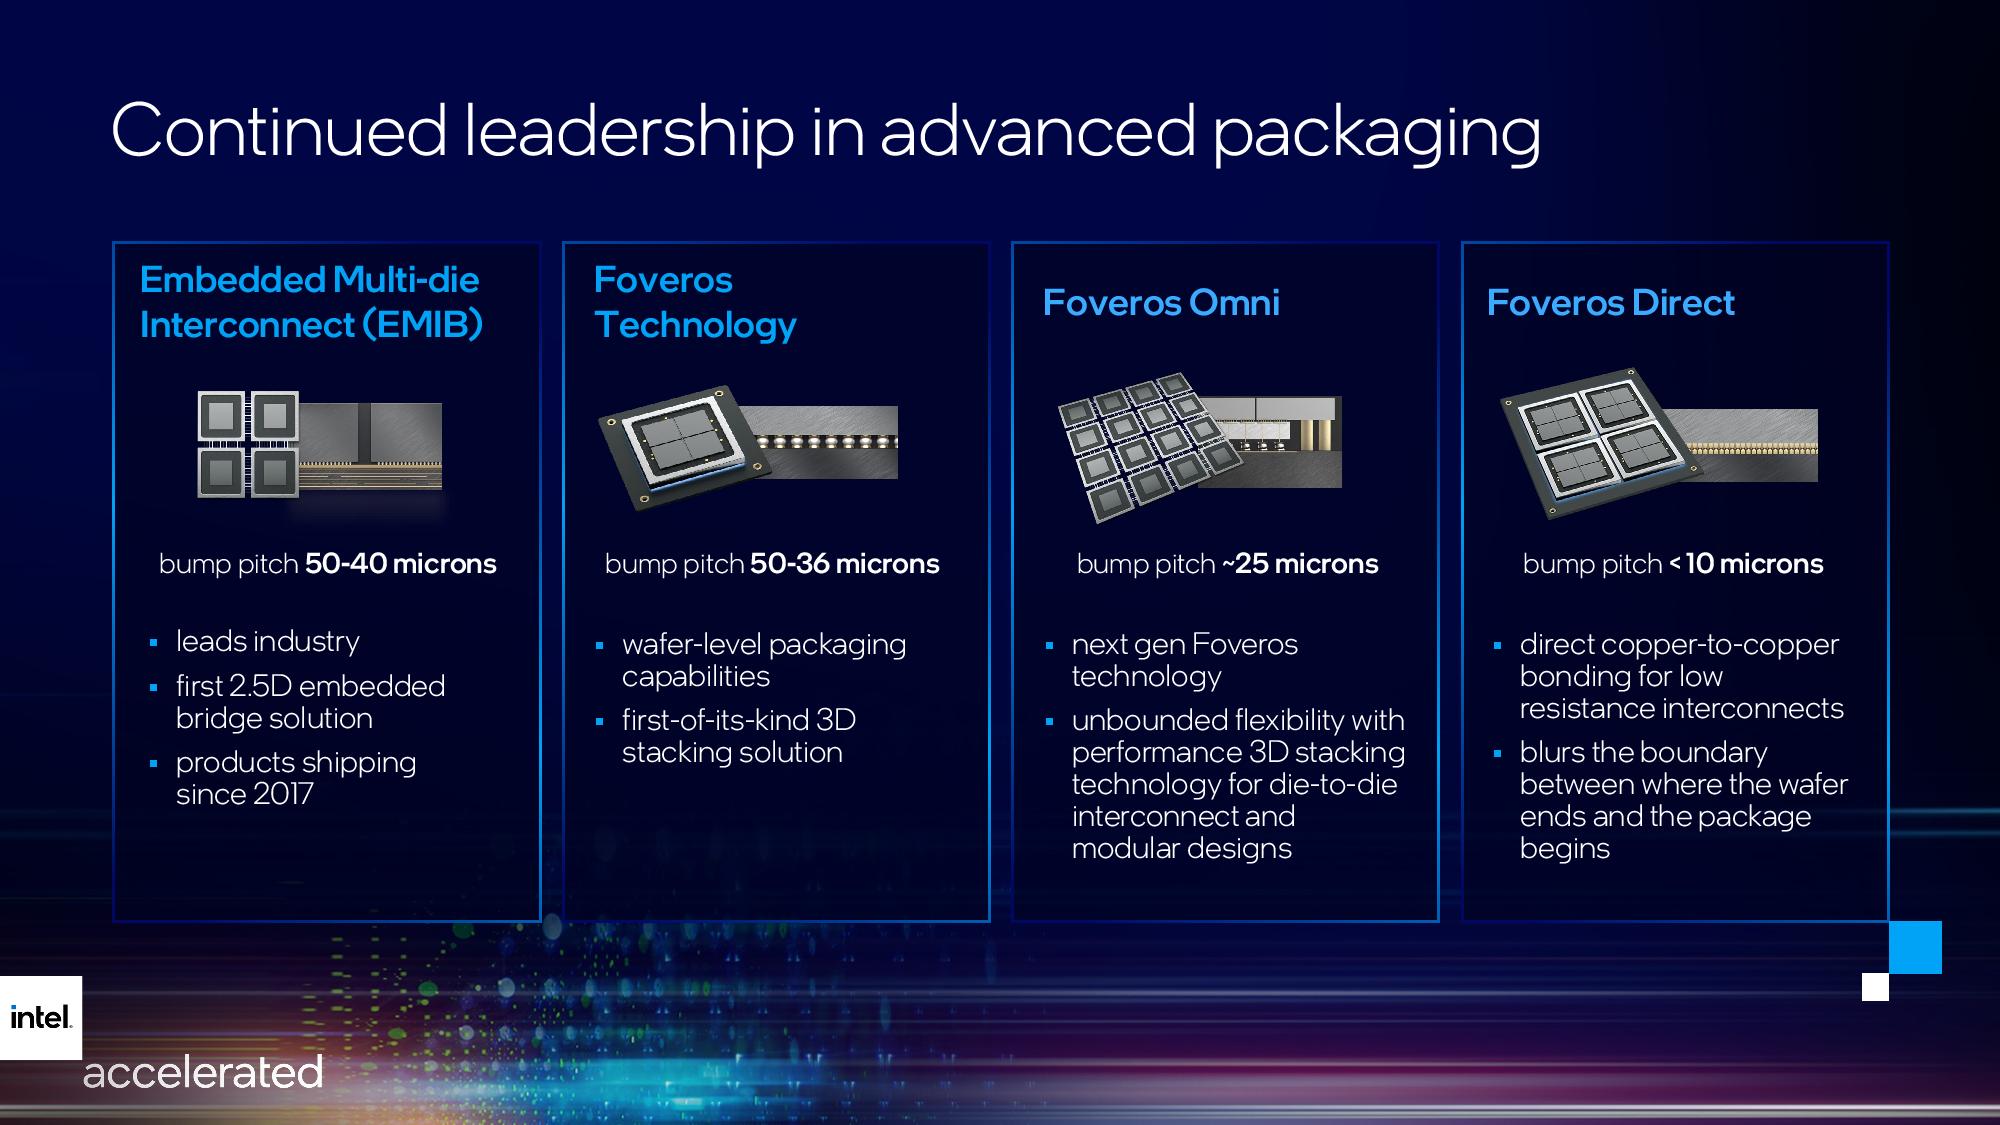 Intel S New Roadmap Reveals Plans Through 2025 Window vrogue.co